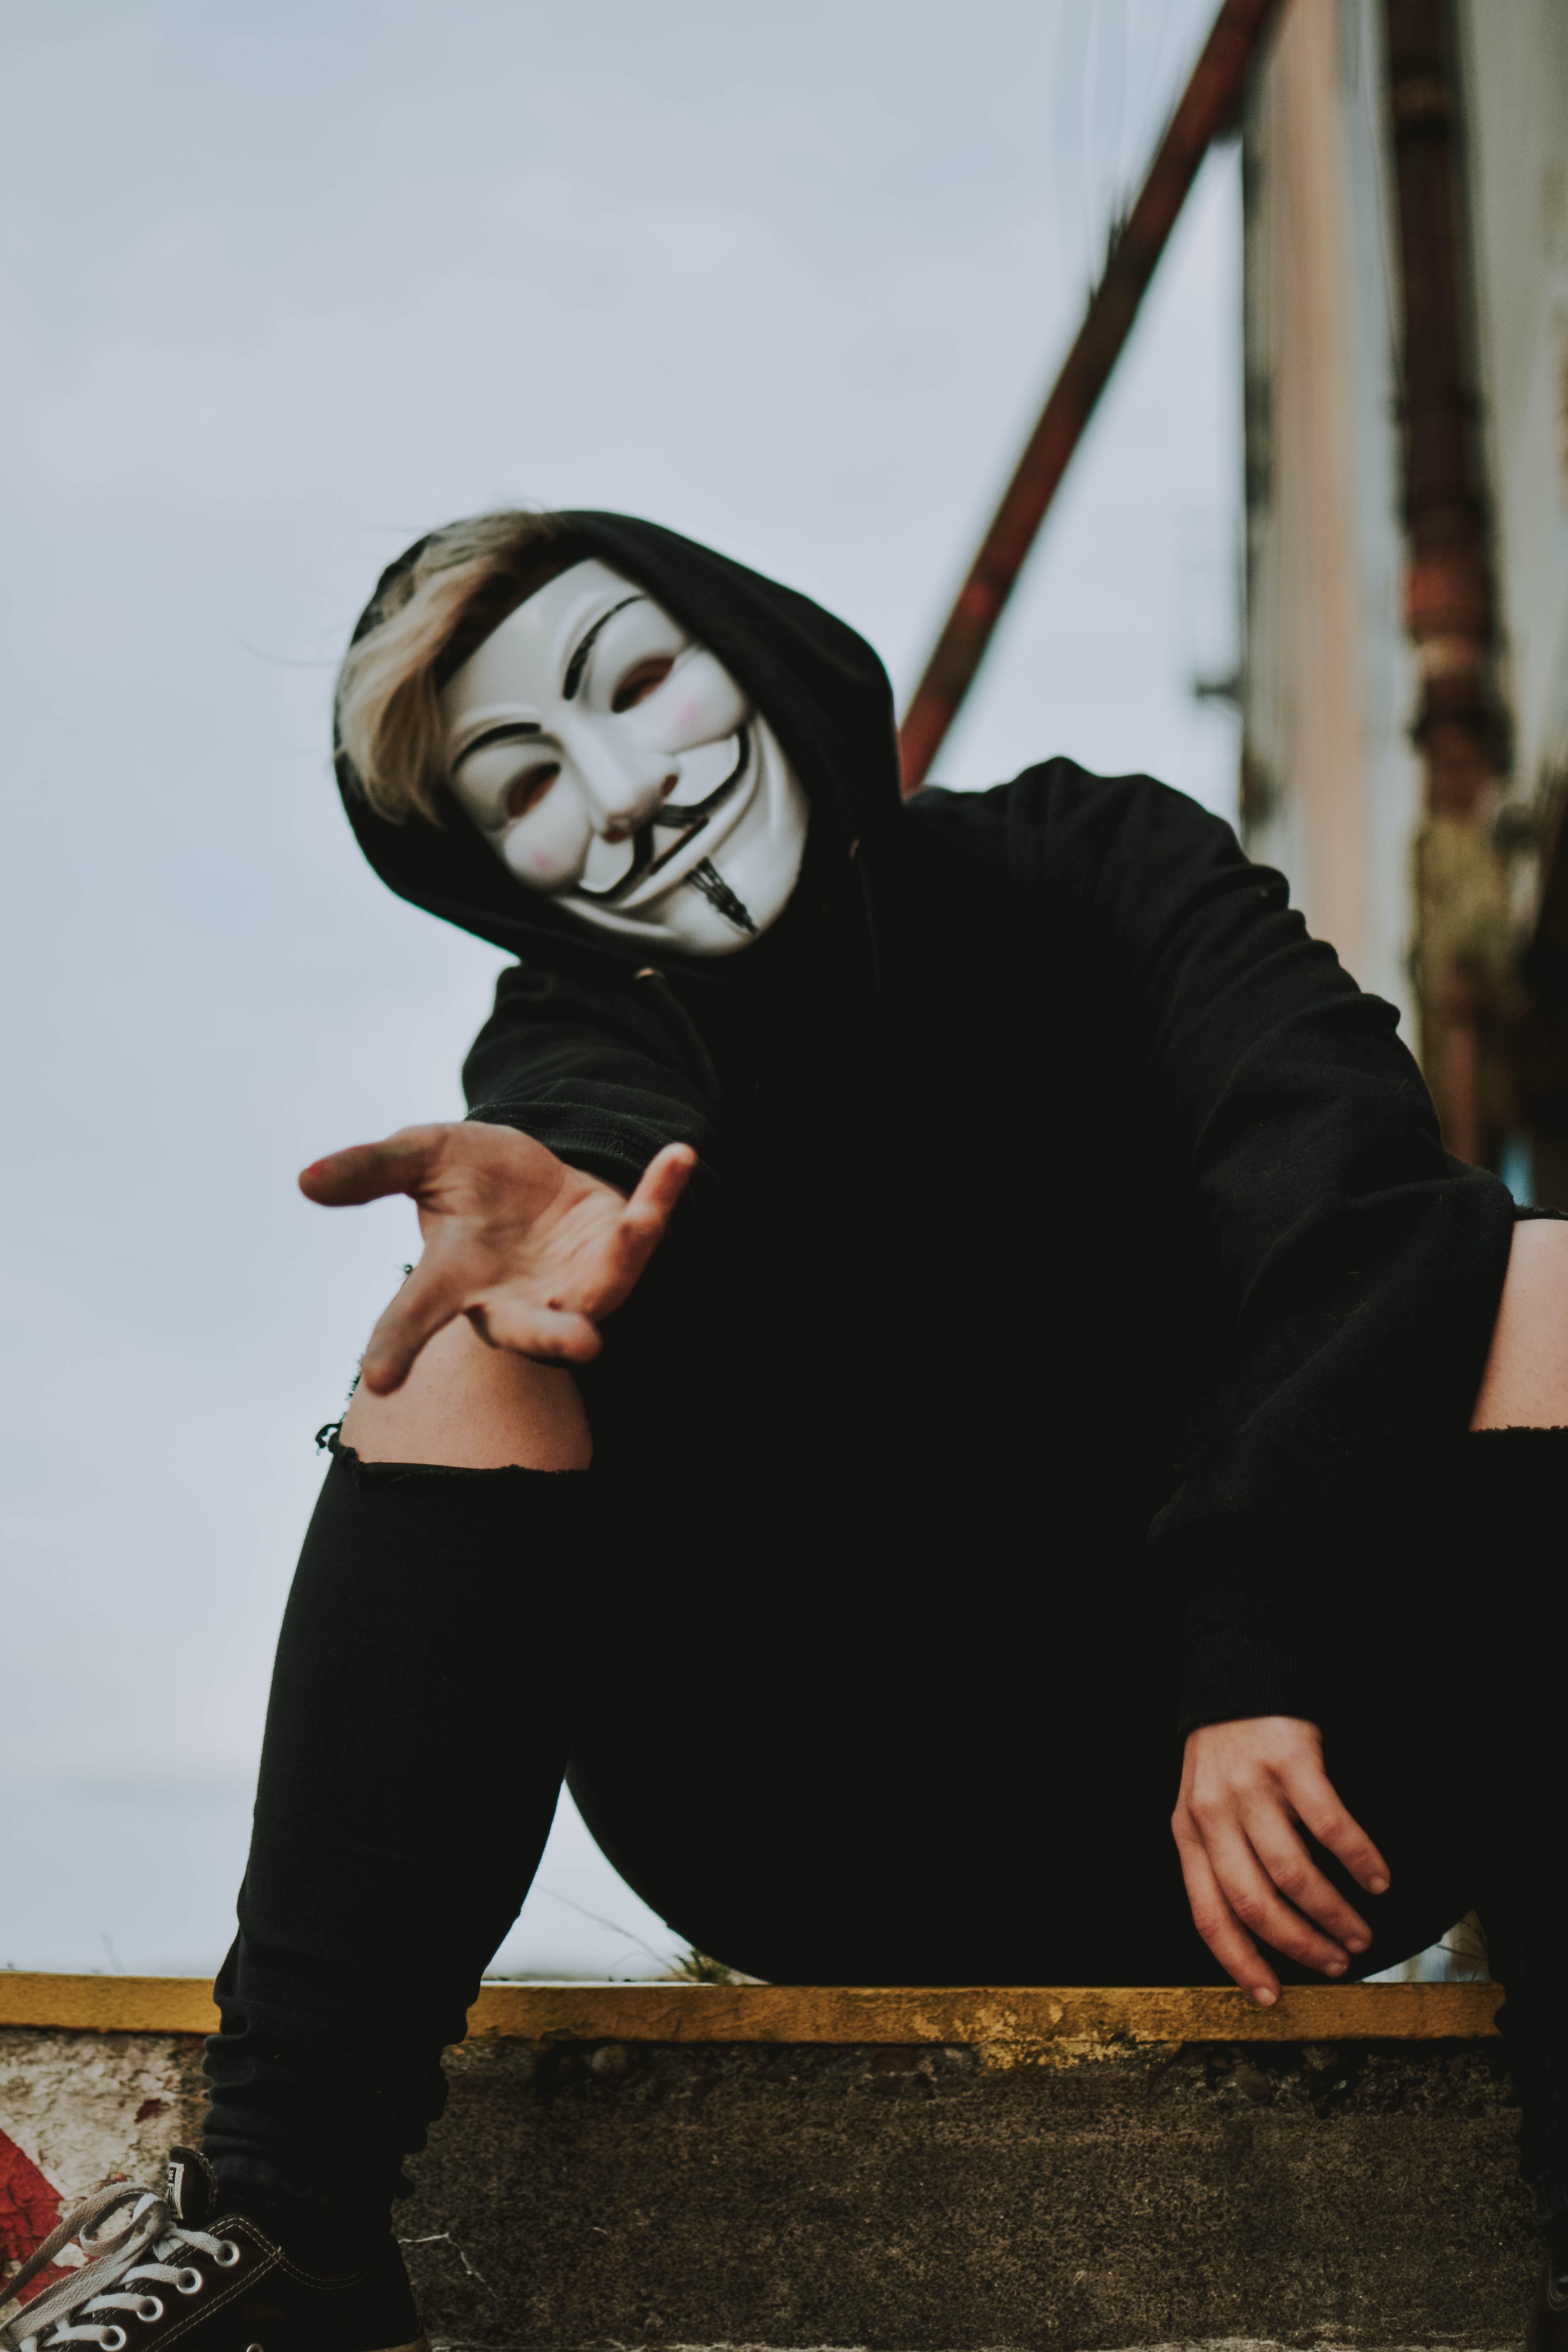 Best Free Hacker Mask & Image · 100% Royalty Free HD Downloads